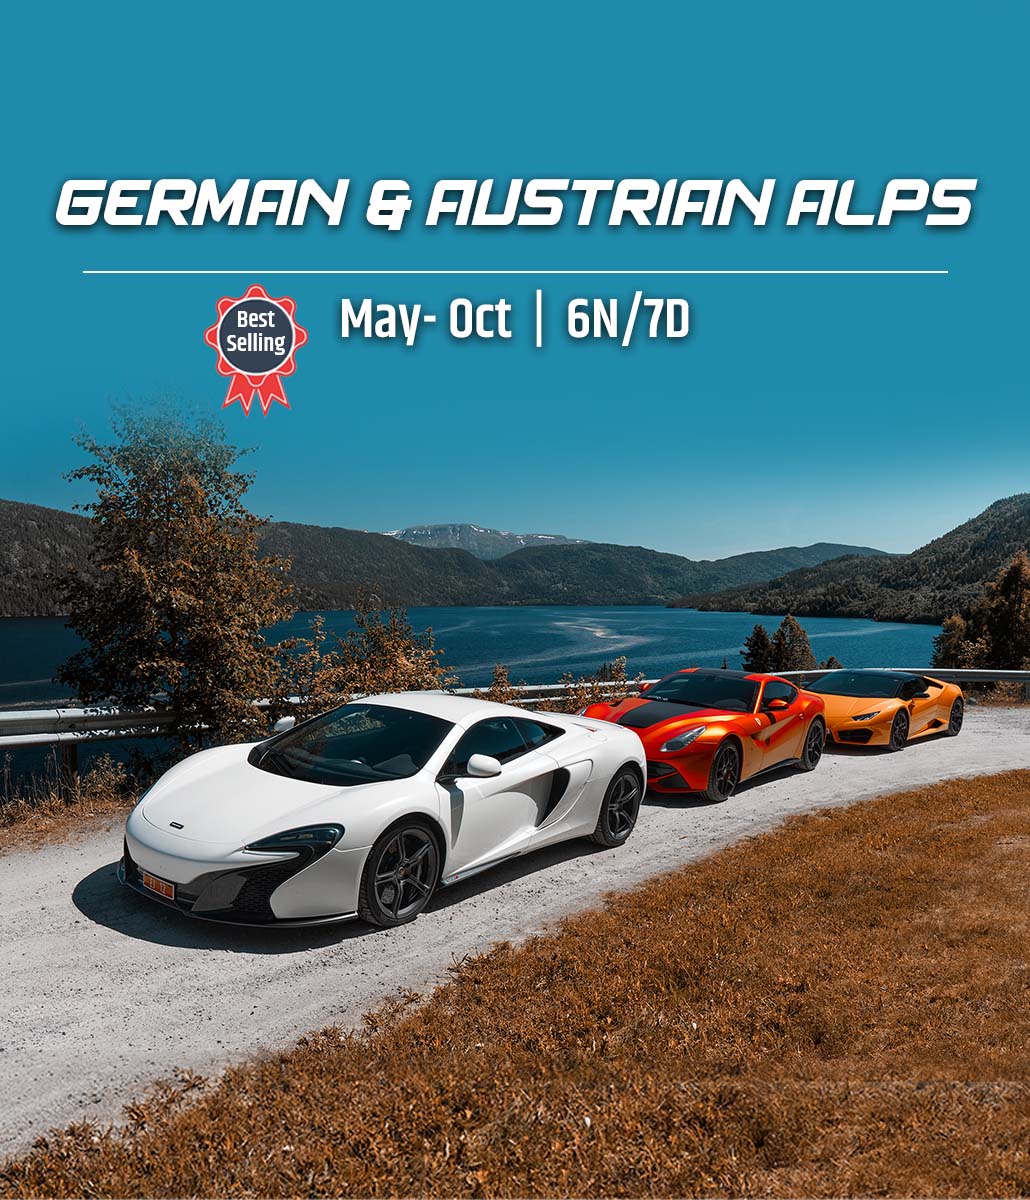 German & Austrian Alps